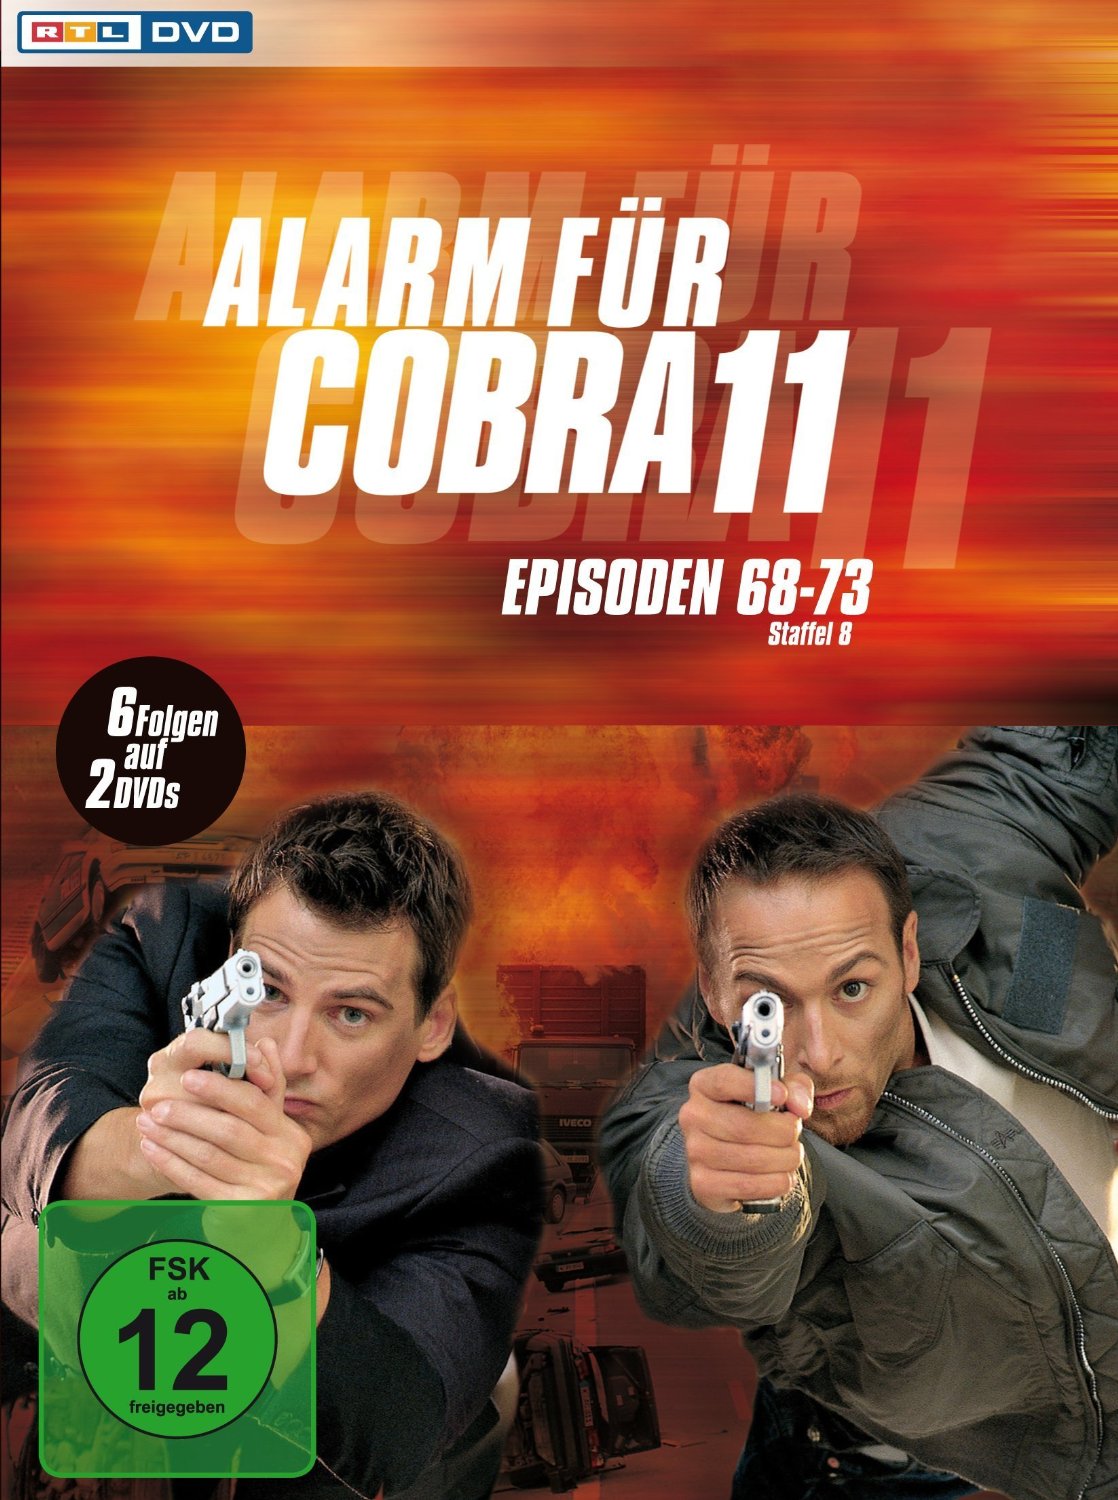 Alarm for cobra